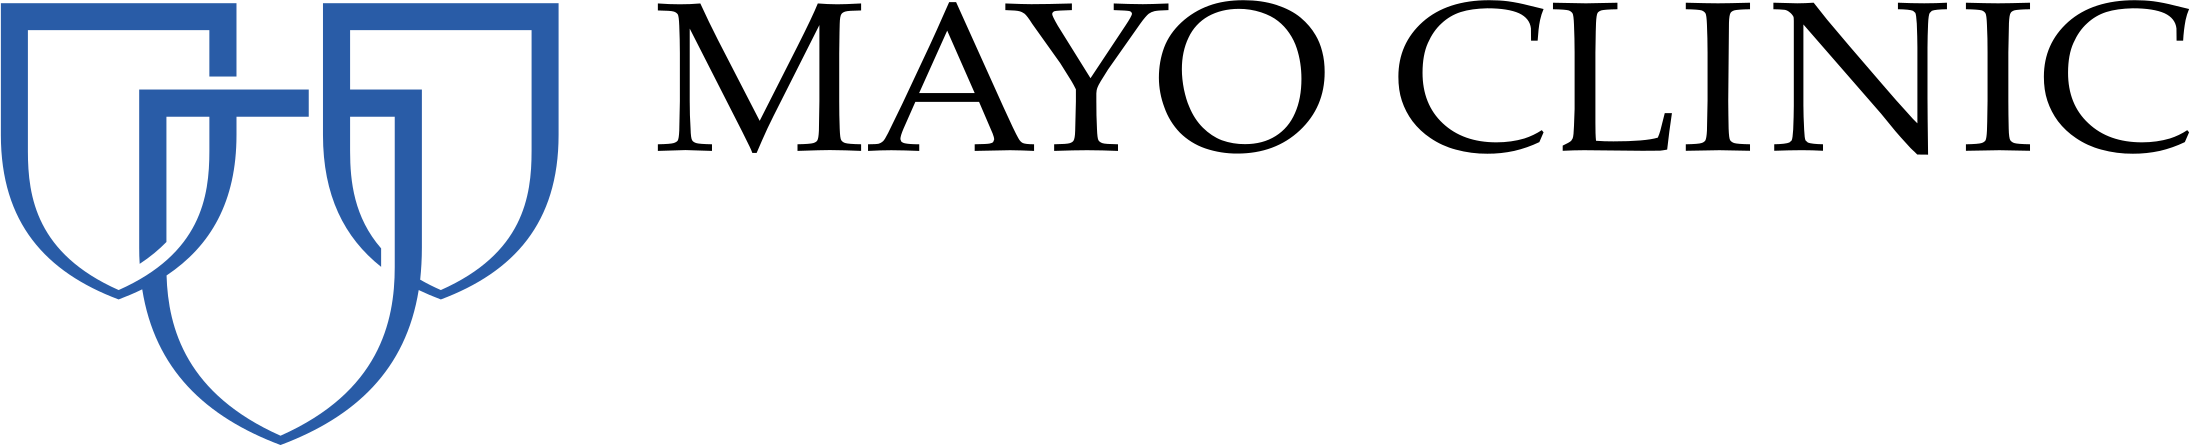 Mayo Clinic Sponsor Logo